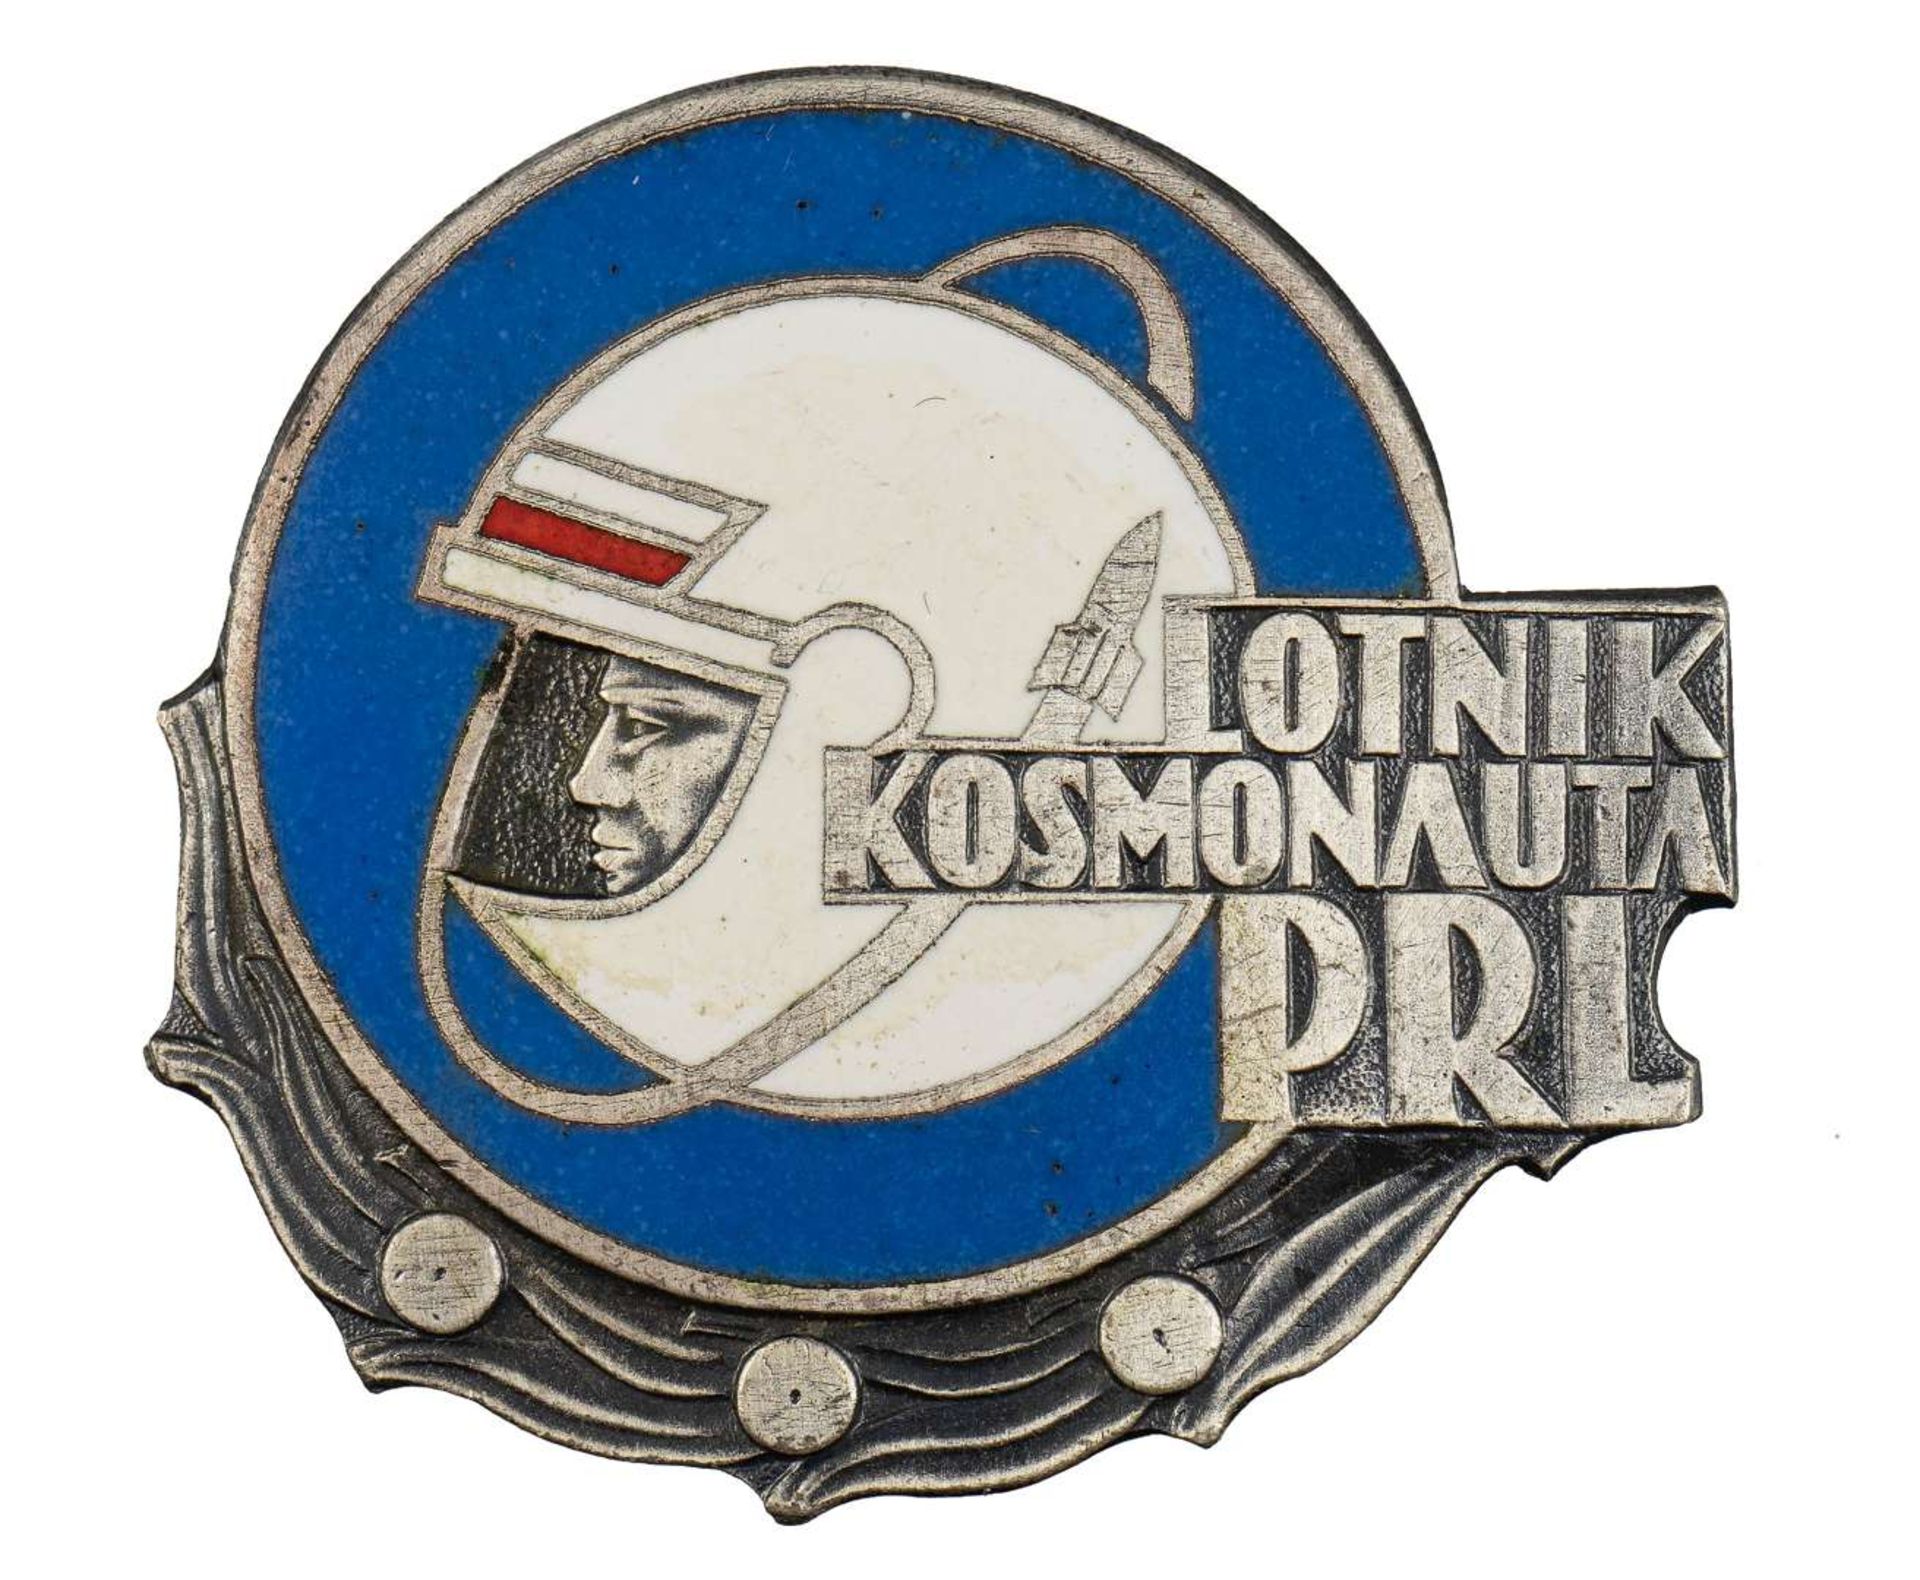 Polish People's Republic Aviator-Cosmonaut Badge of the Polish People's Republic